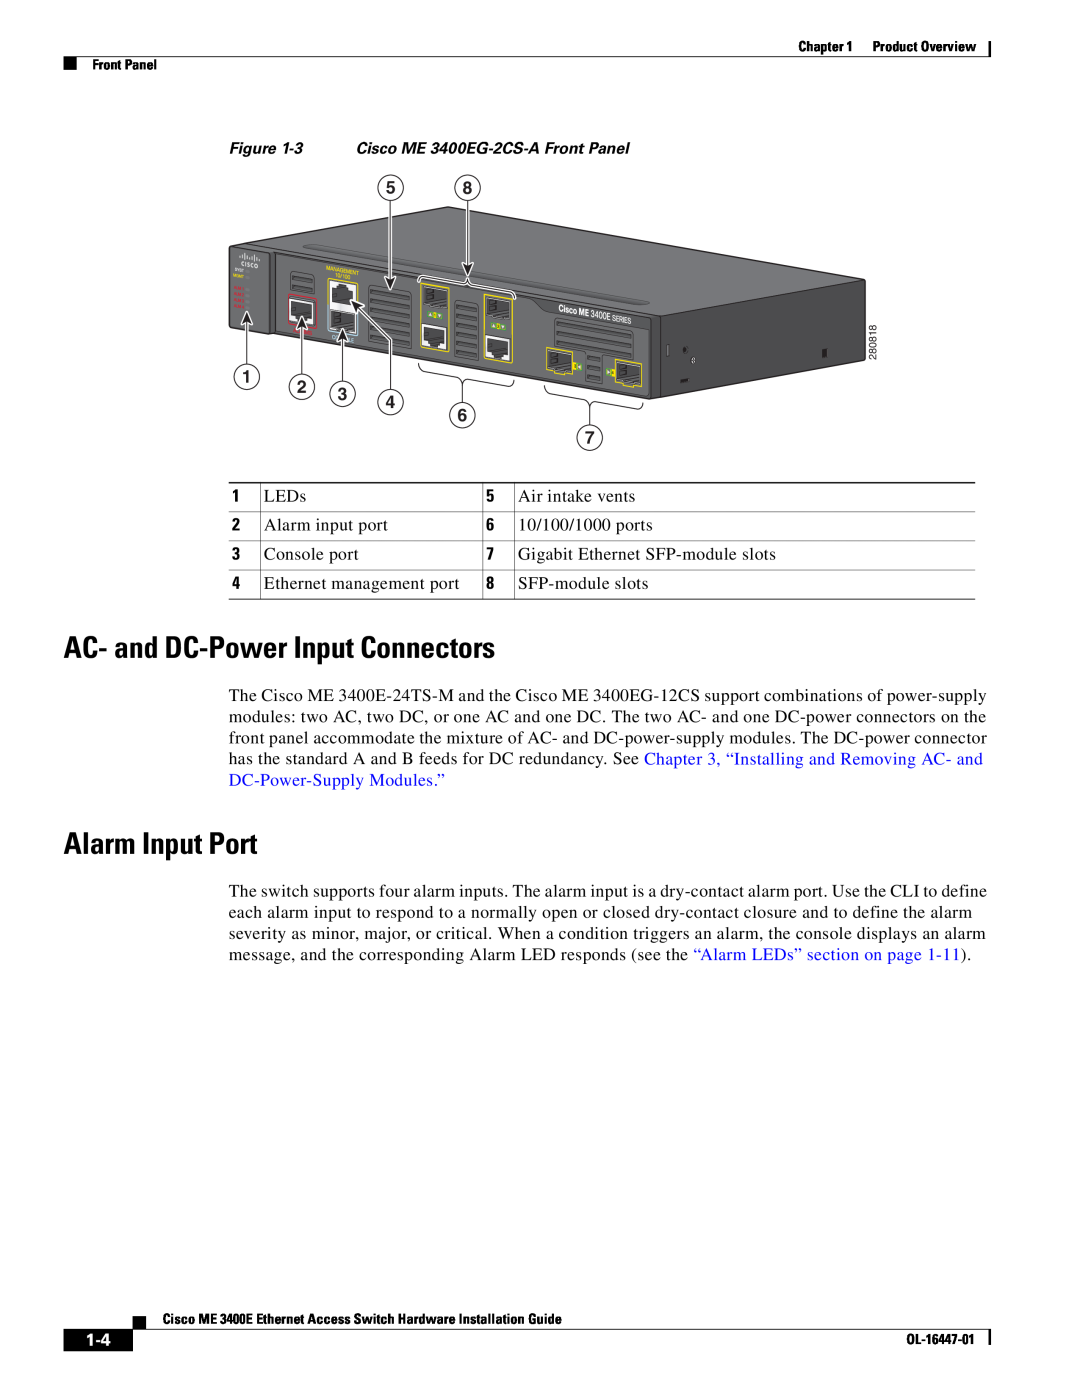 Cisco Systems OL-16447-01 manual AC- and DC-Power Input Connectors, Alarm Input Port, 3 Cisco ME 3400EG-2CS-A Front Panel 